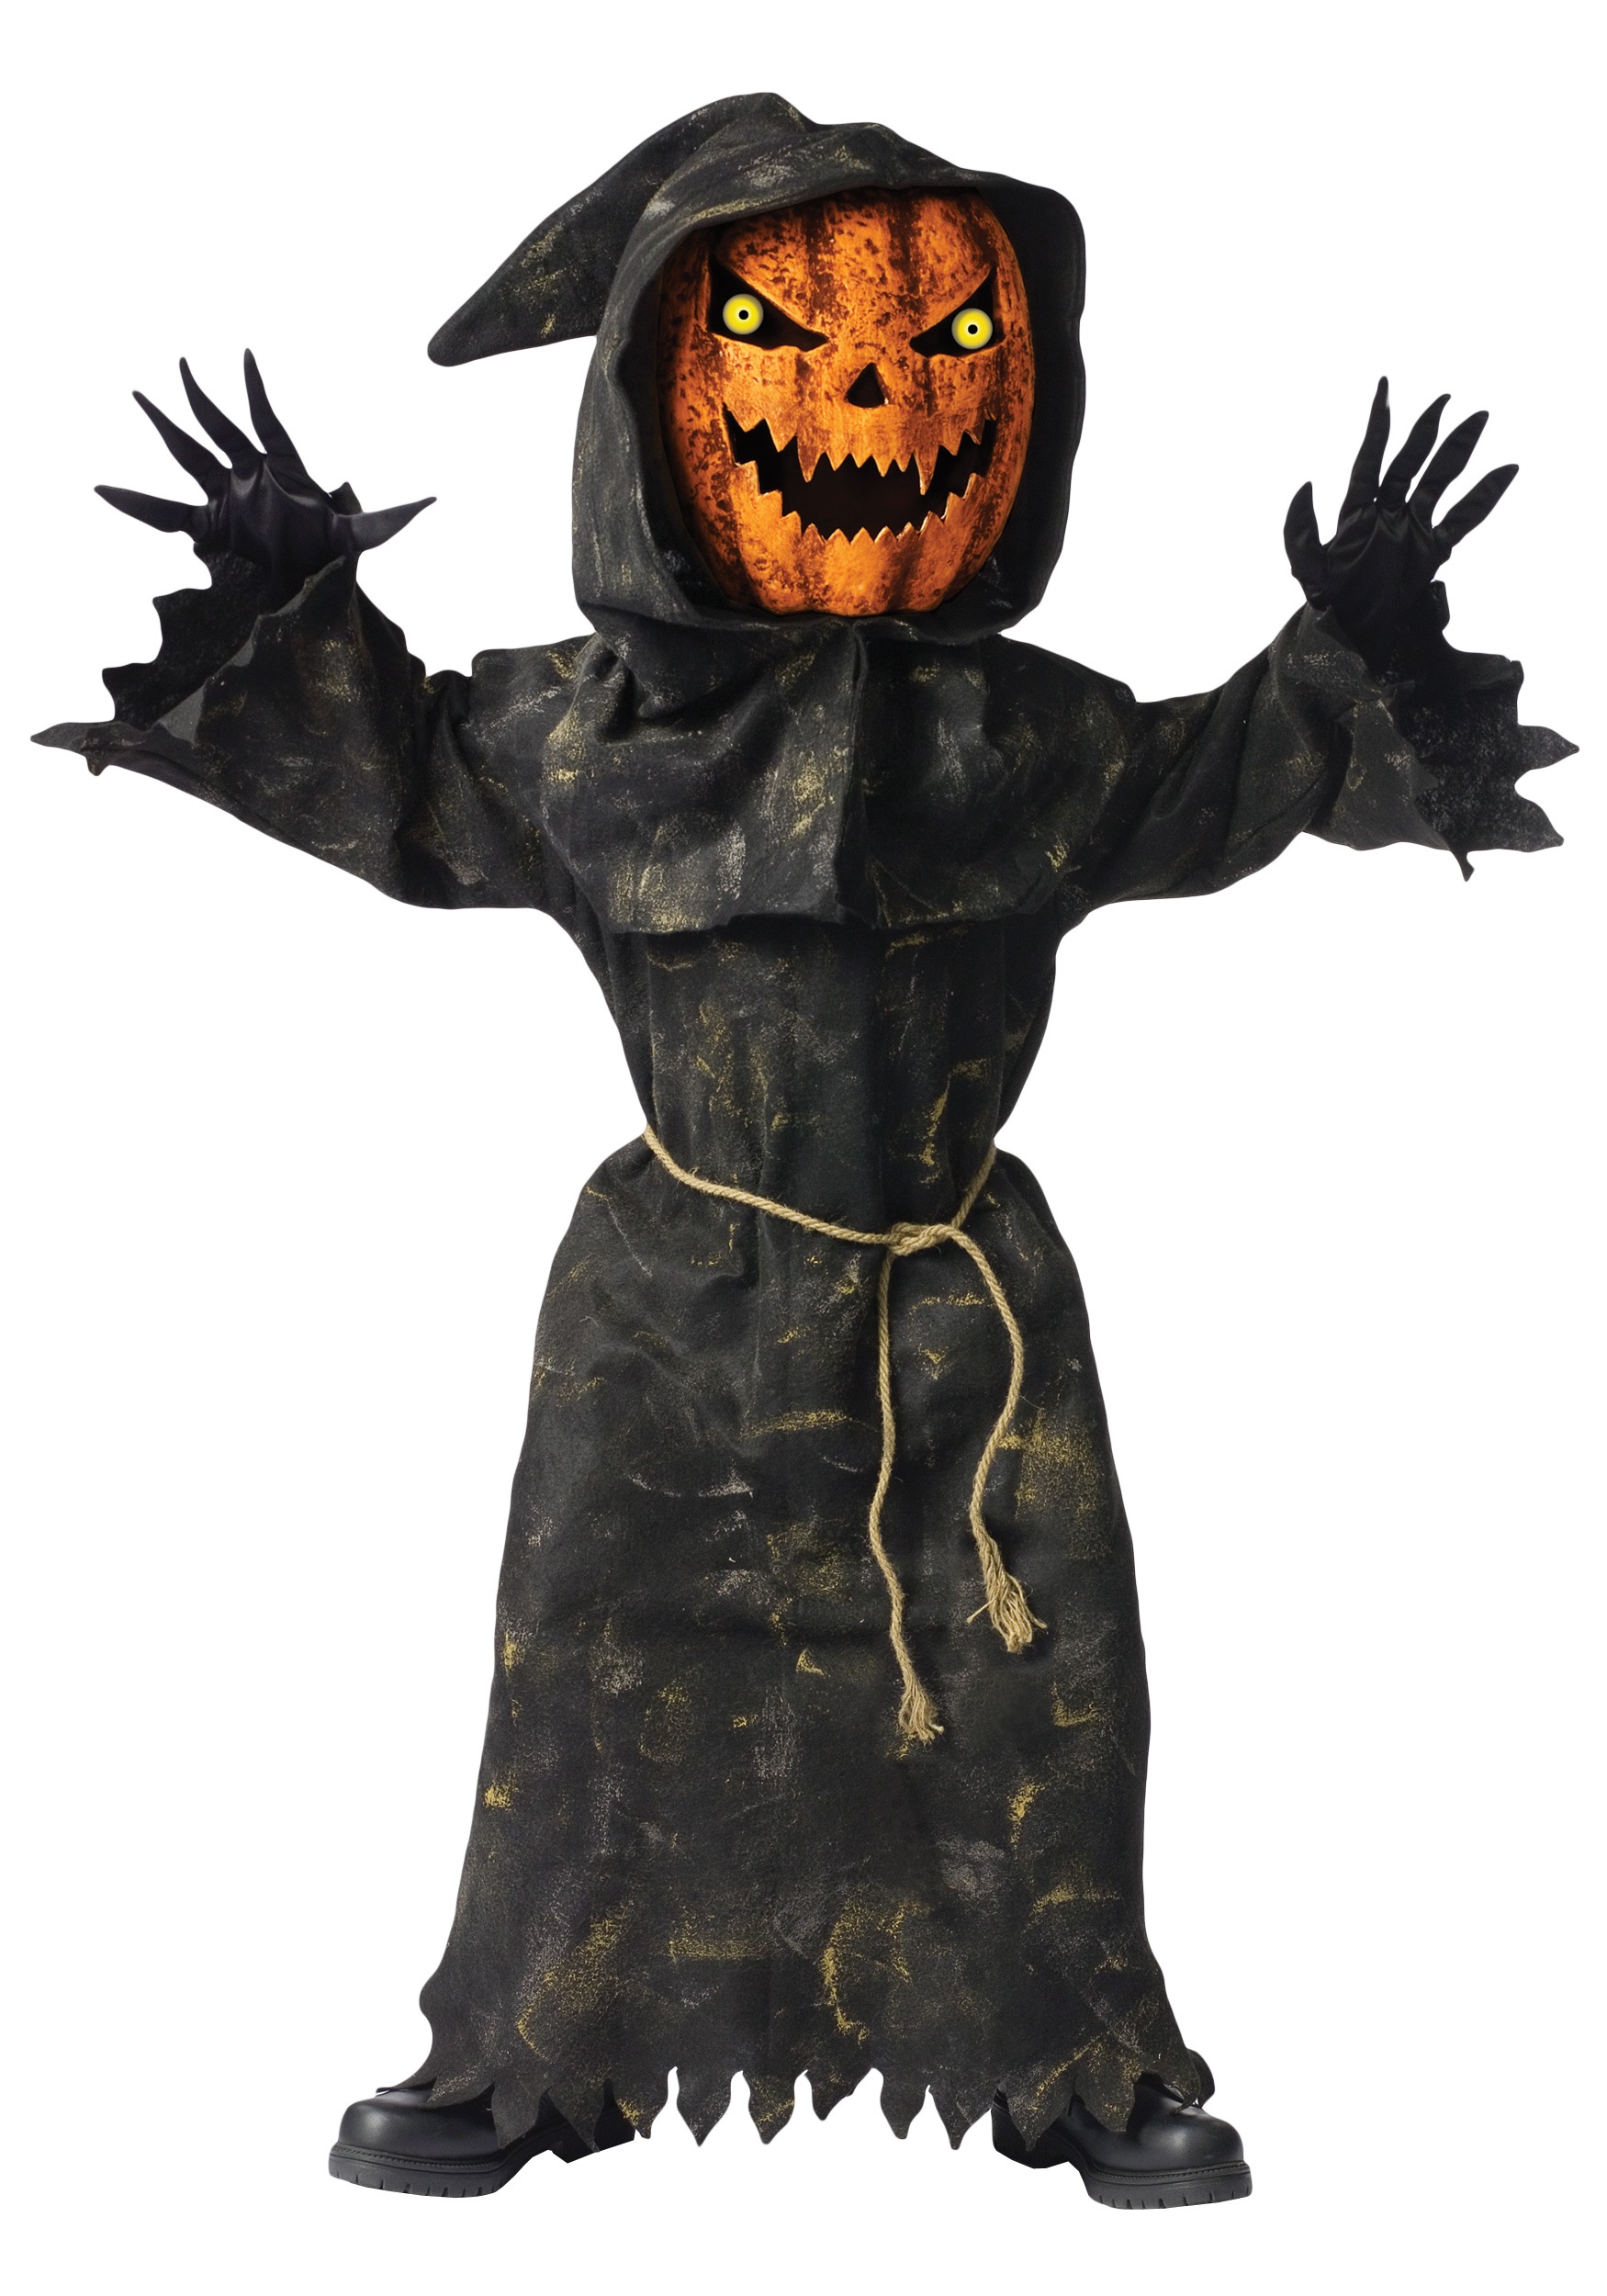 Photos - Fancy Dress Bobble Fun World Scary Eyed Pumpkin Costume for Kids Black/Orange FU130112 